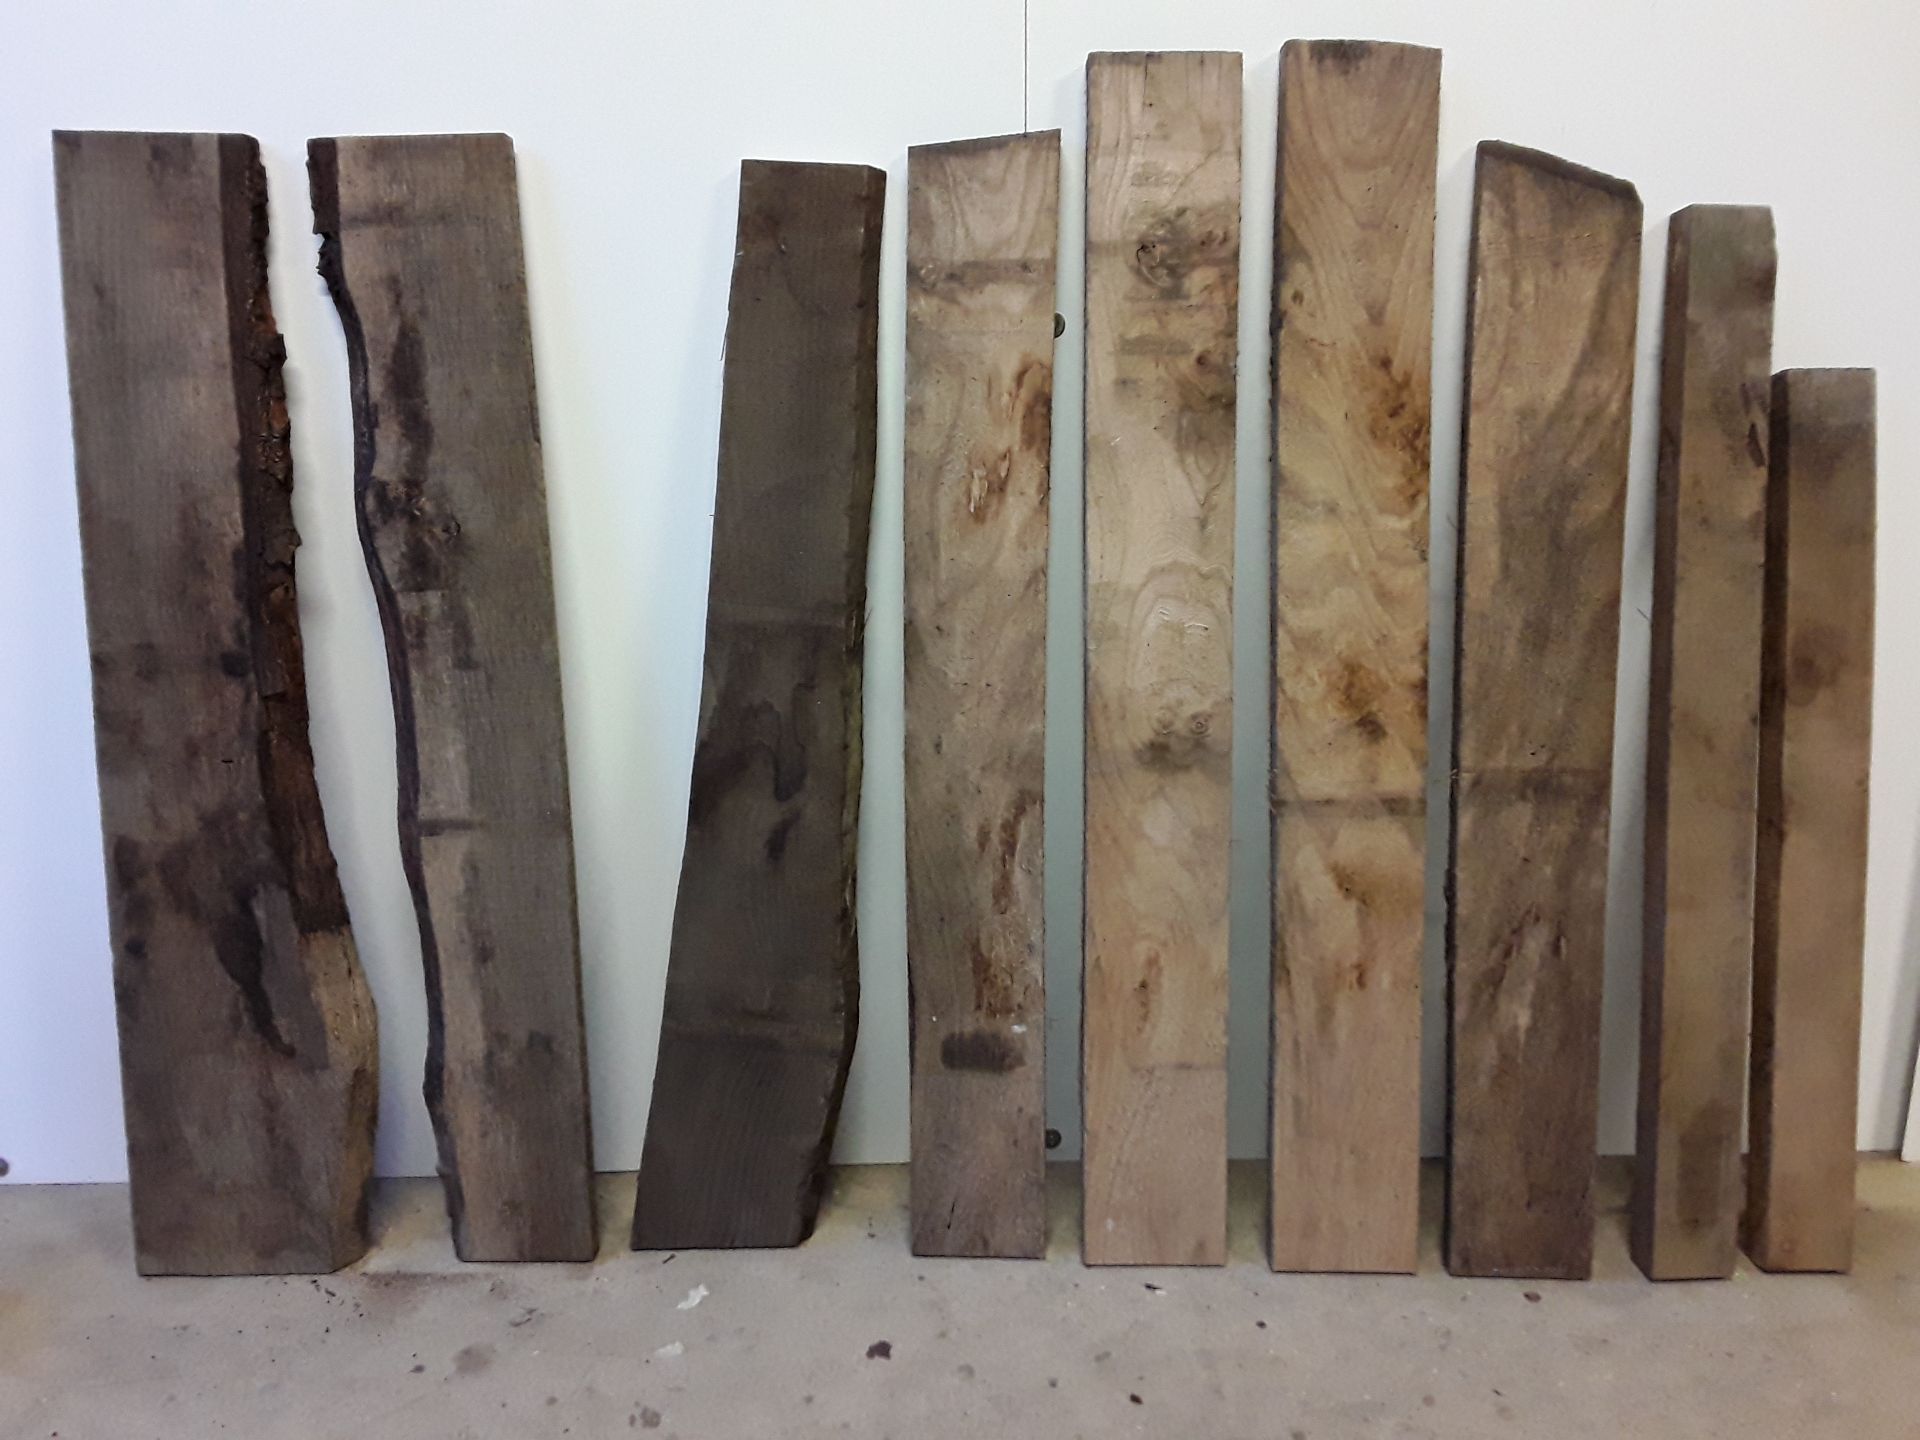 27 x Hardwood Timber Air Dried Sawn English Oak, Chestnut, Cherry, Elm Waney Edge / Square Edge Boar - Image 10 of 11